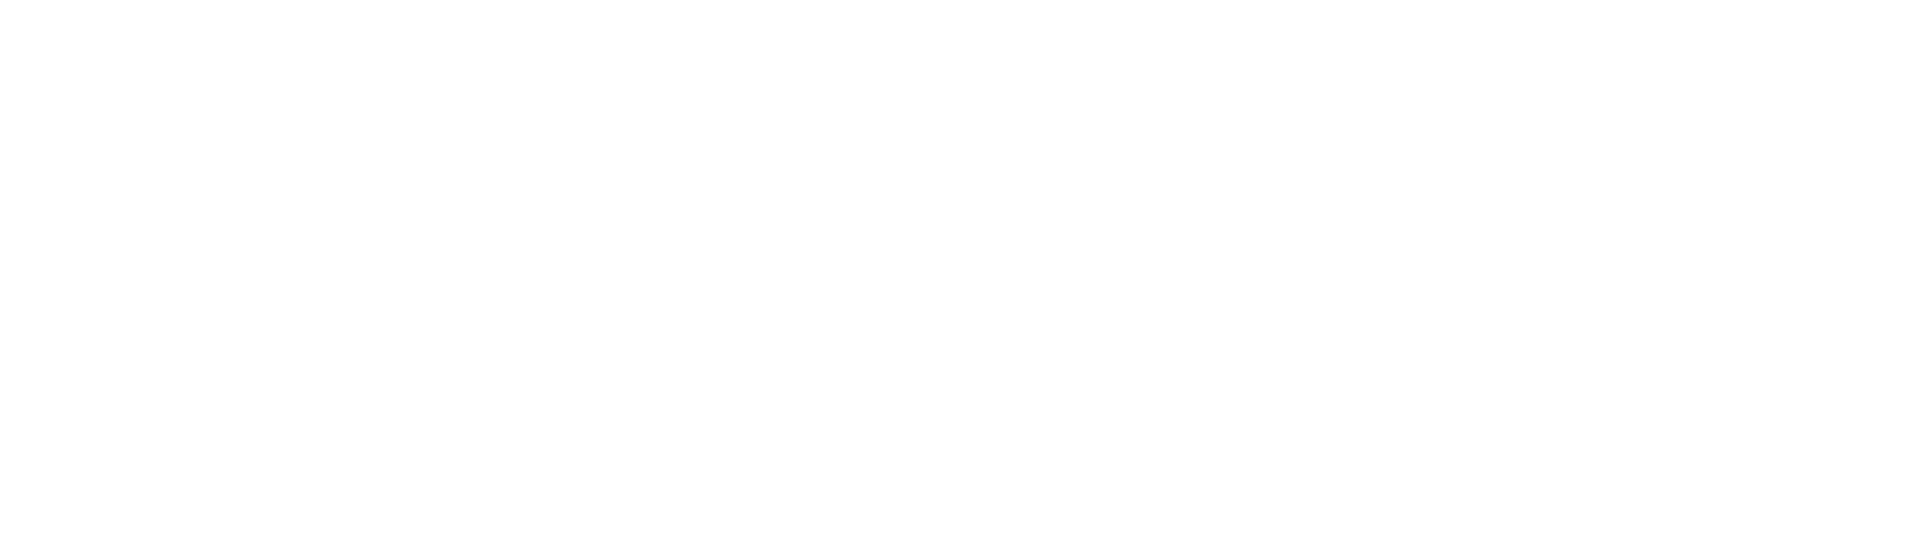 Chiemgau Residenzen, Projekt Bad Aibling